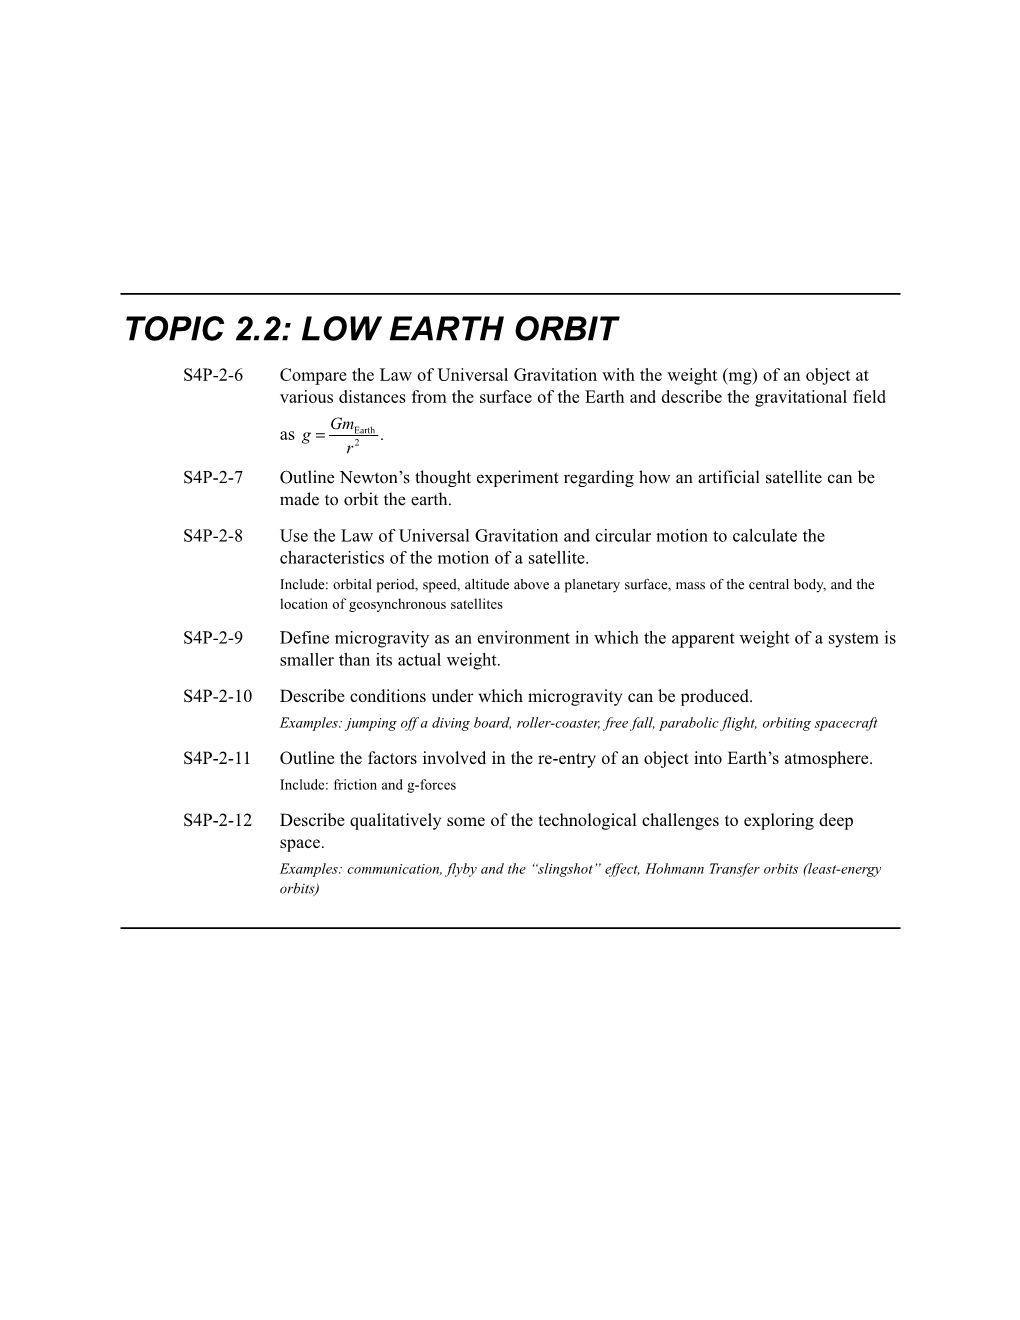 Topic 2.2: Low Earth Orbit